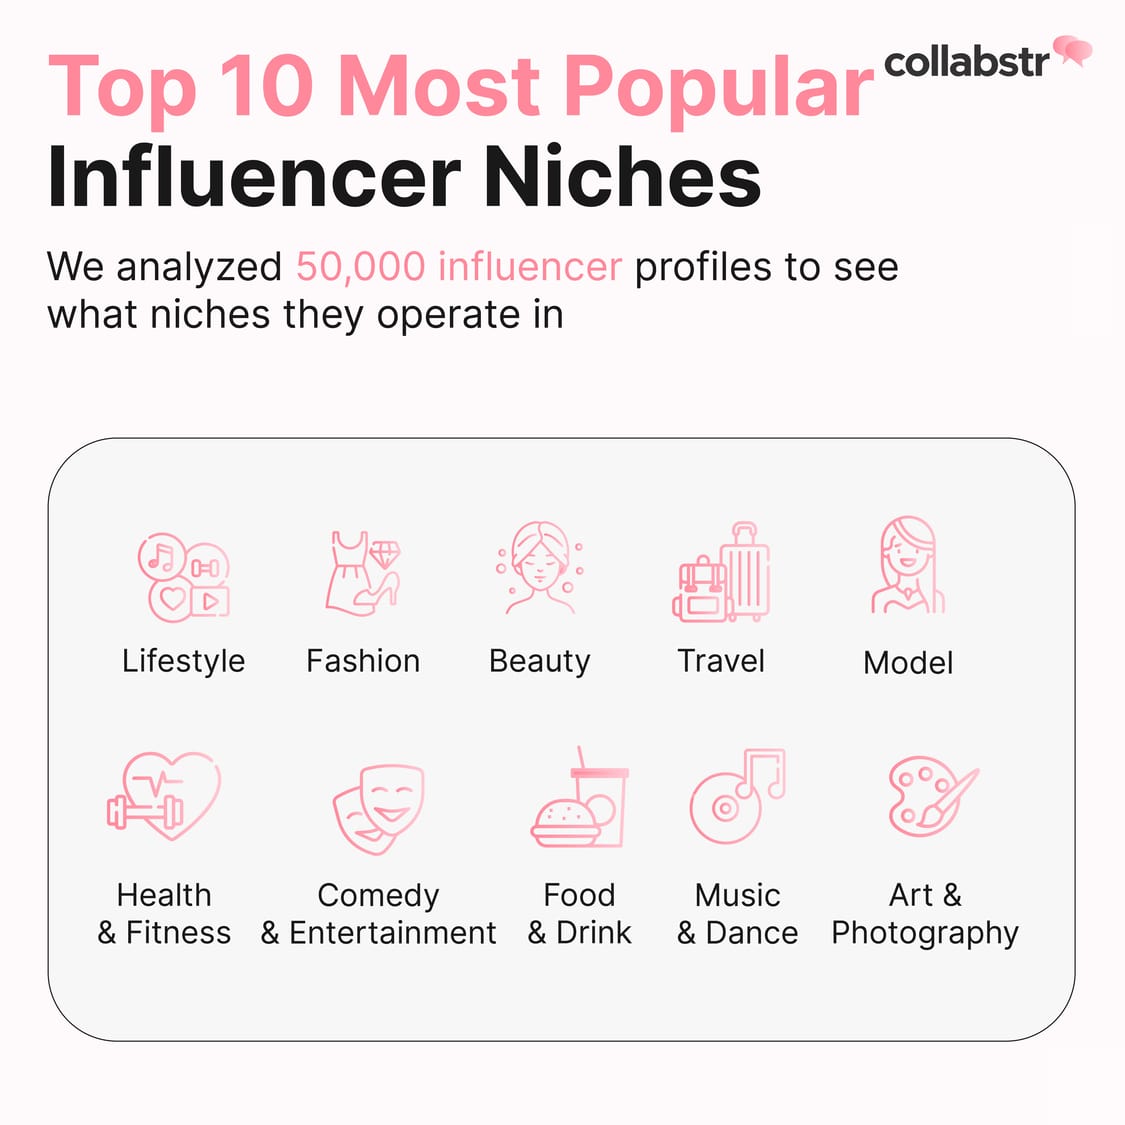 Top 10 most popular influencer niches.